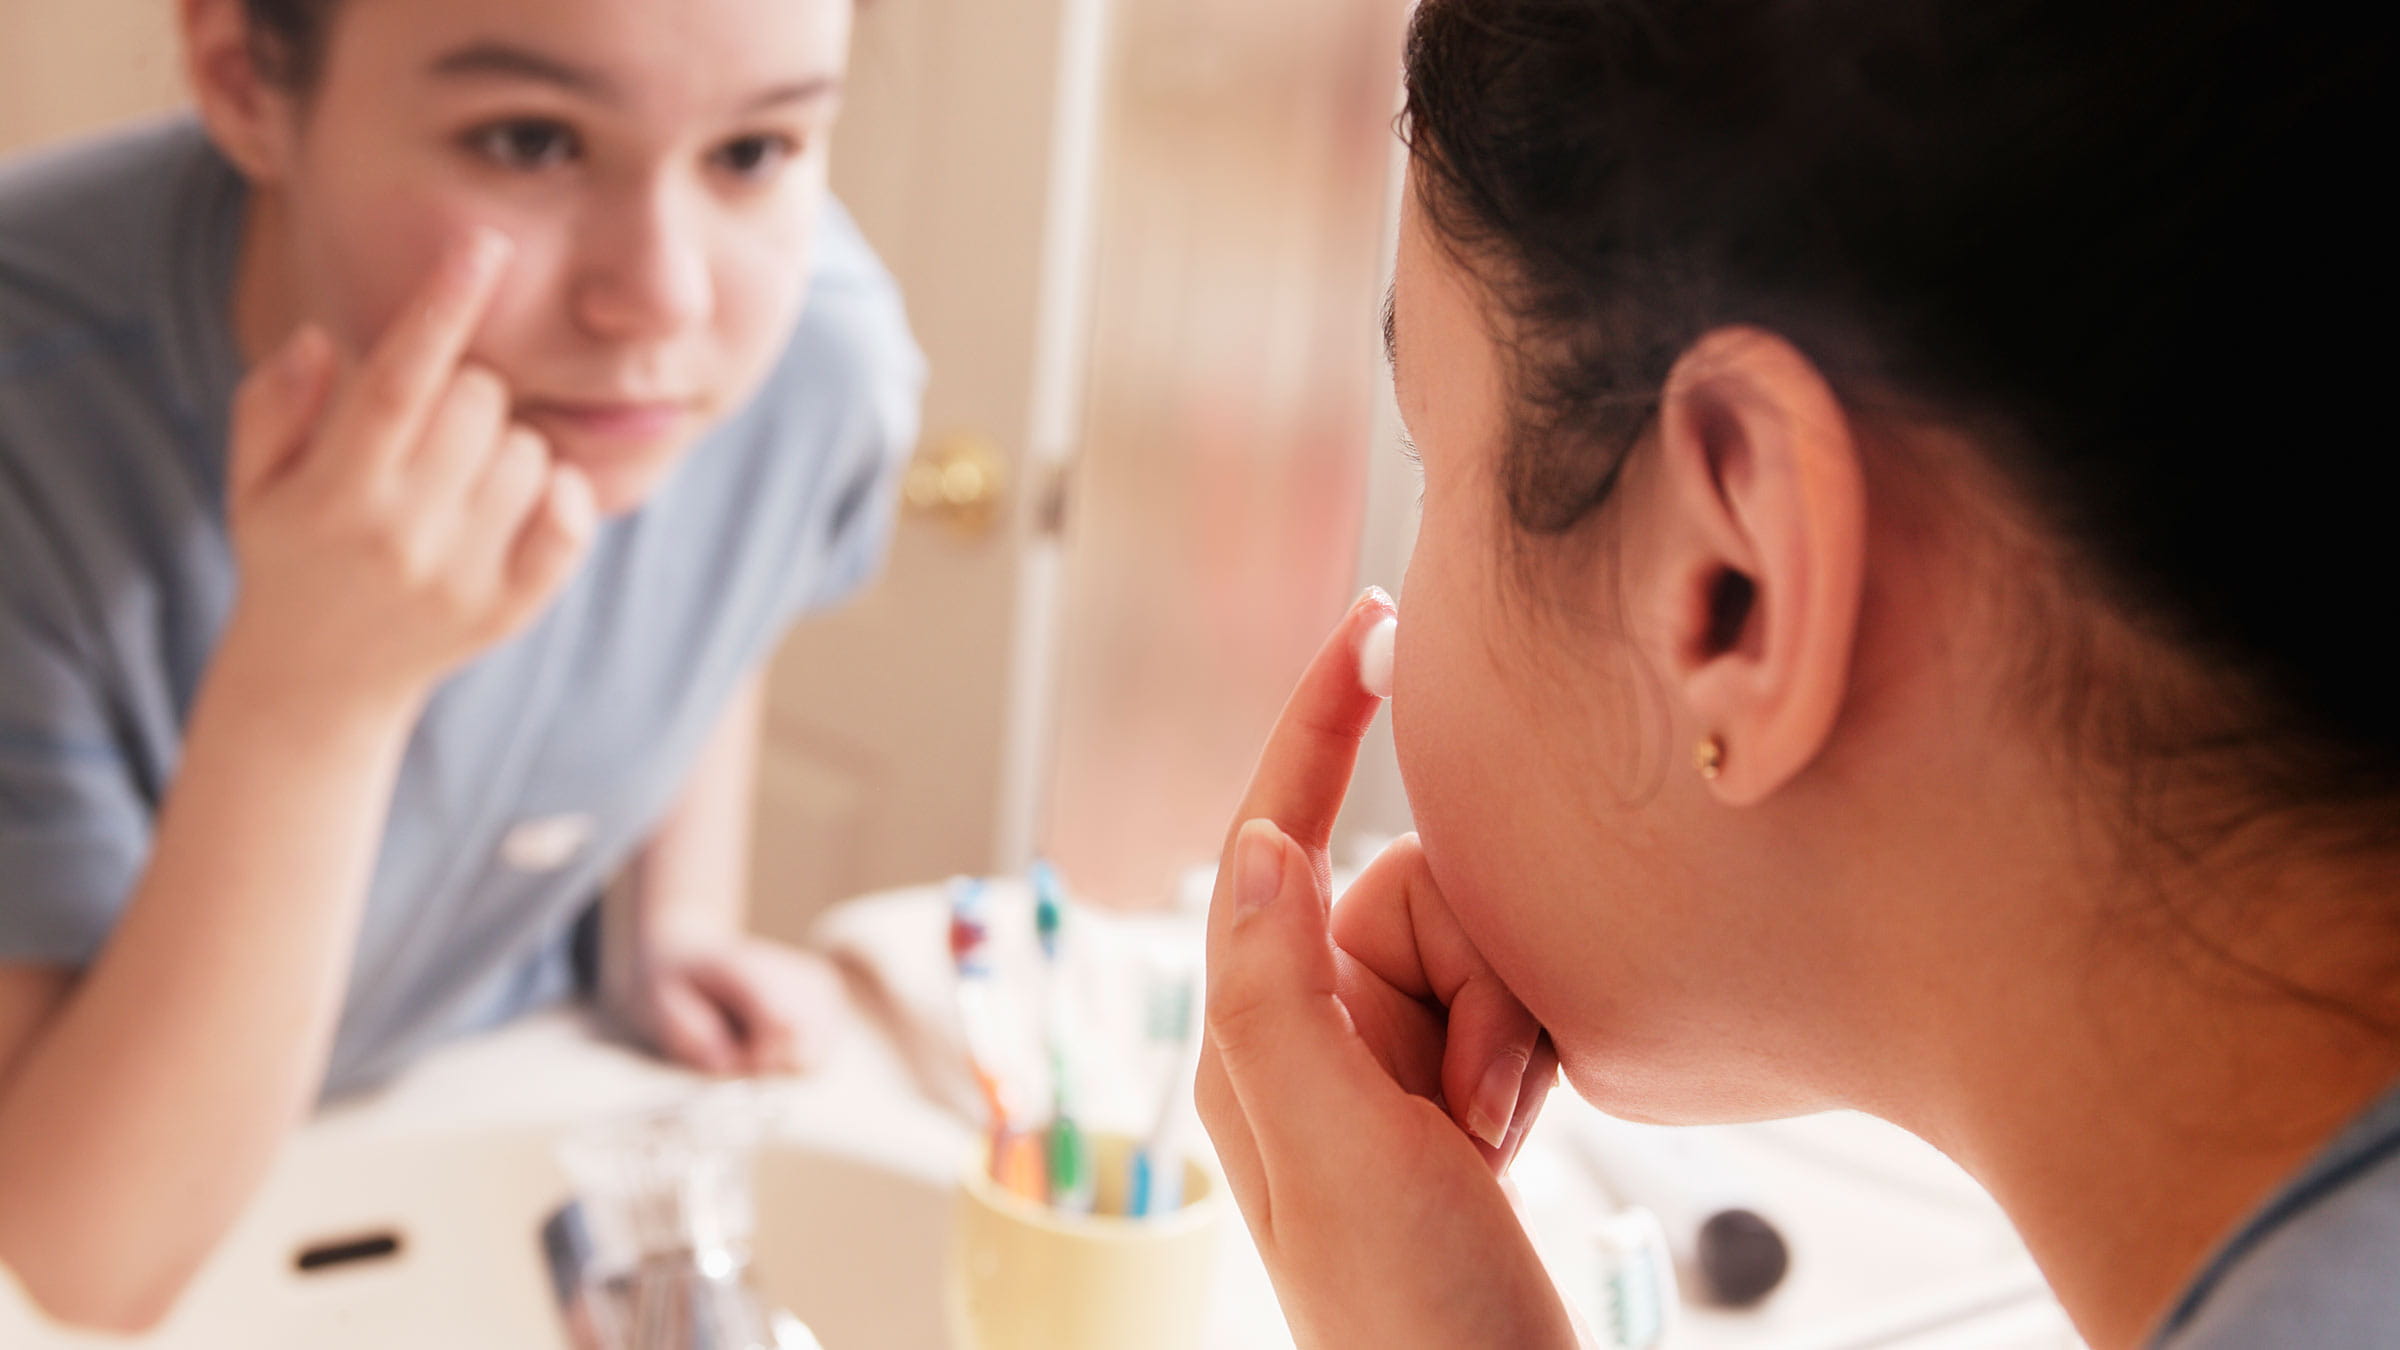 Teen applies facial cream looking in a bathroom mirror